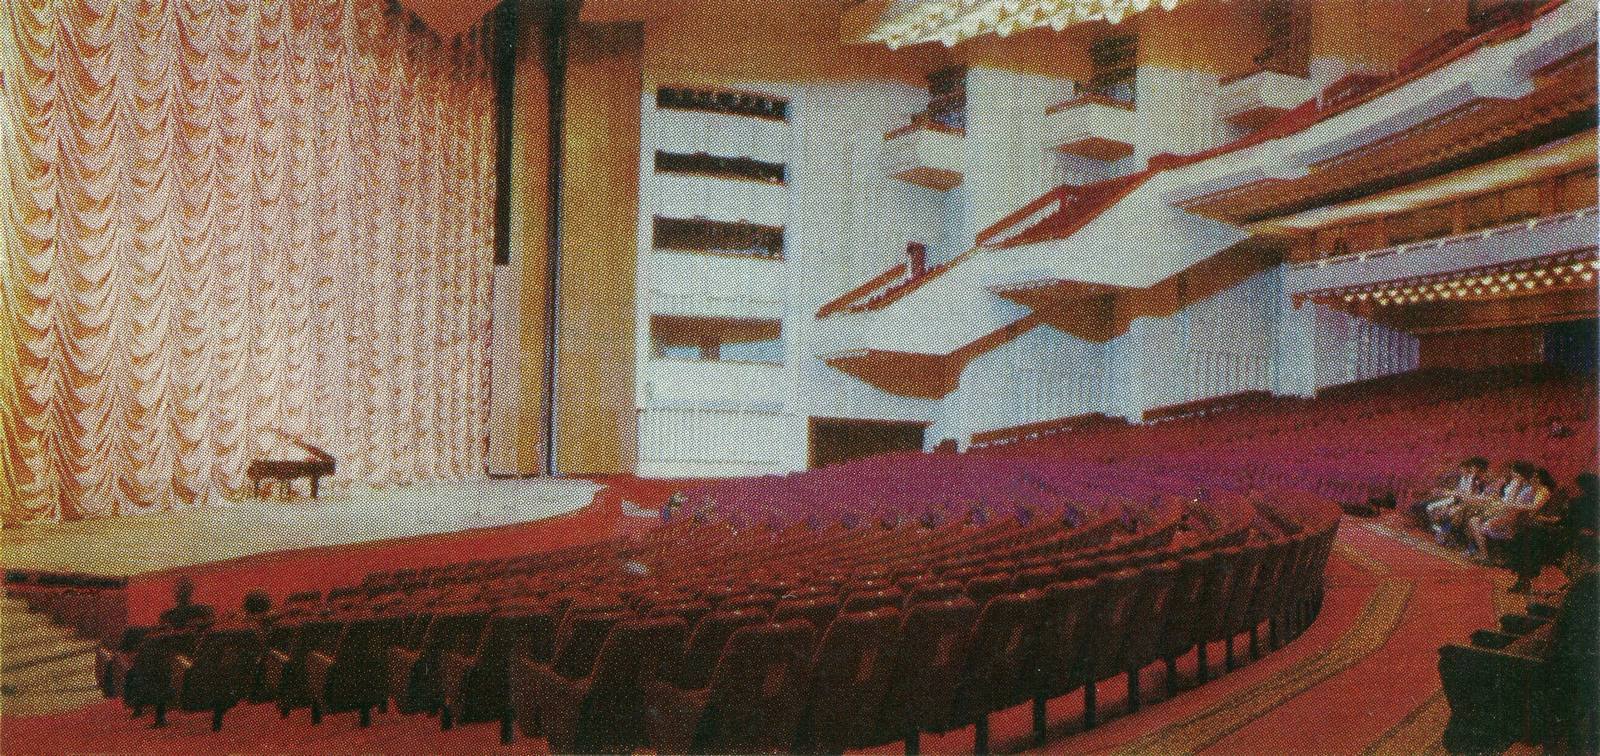 Дворец «Дружбы народов», вид изнутри, 1978 г.